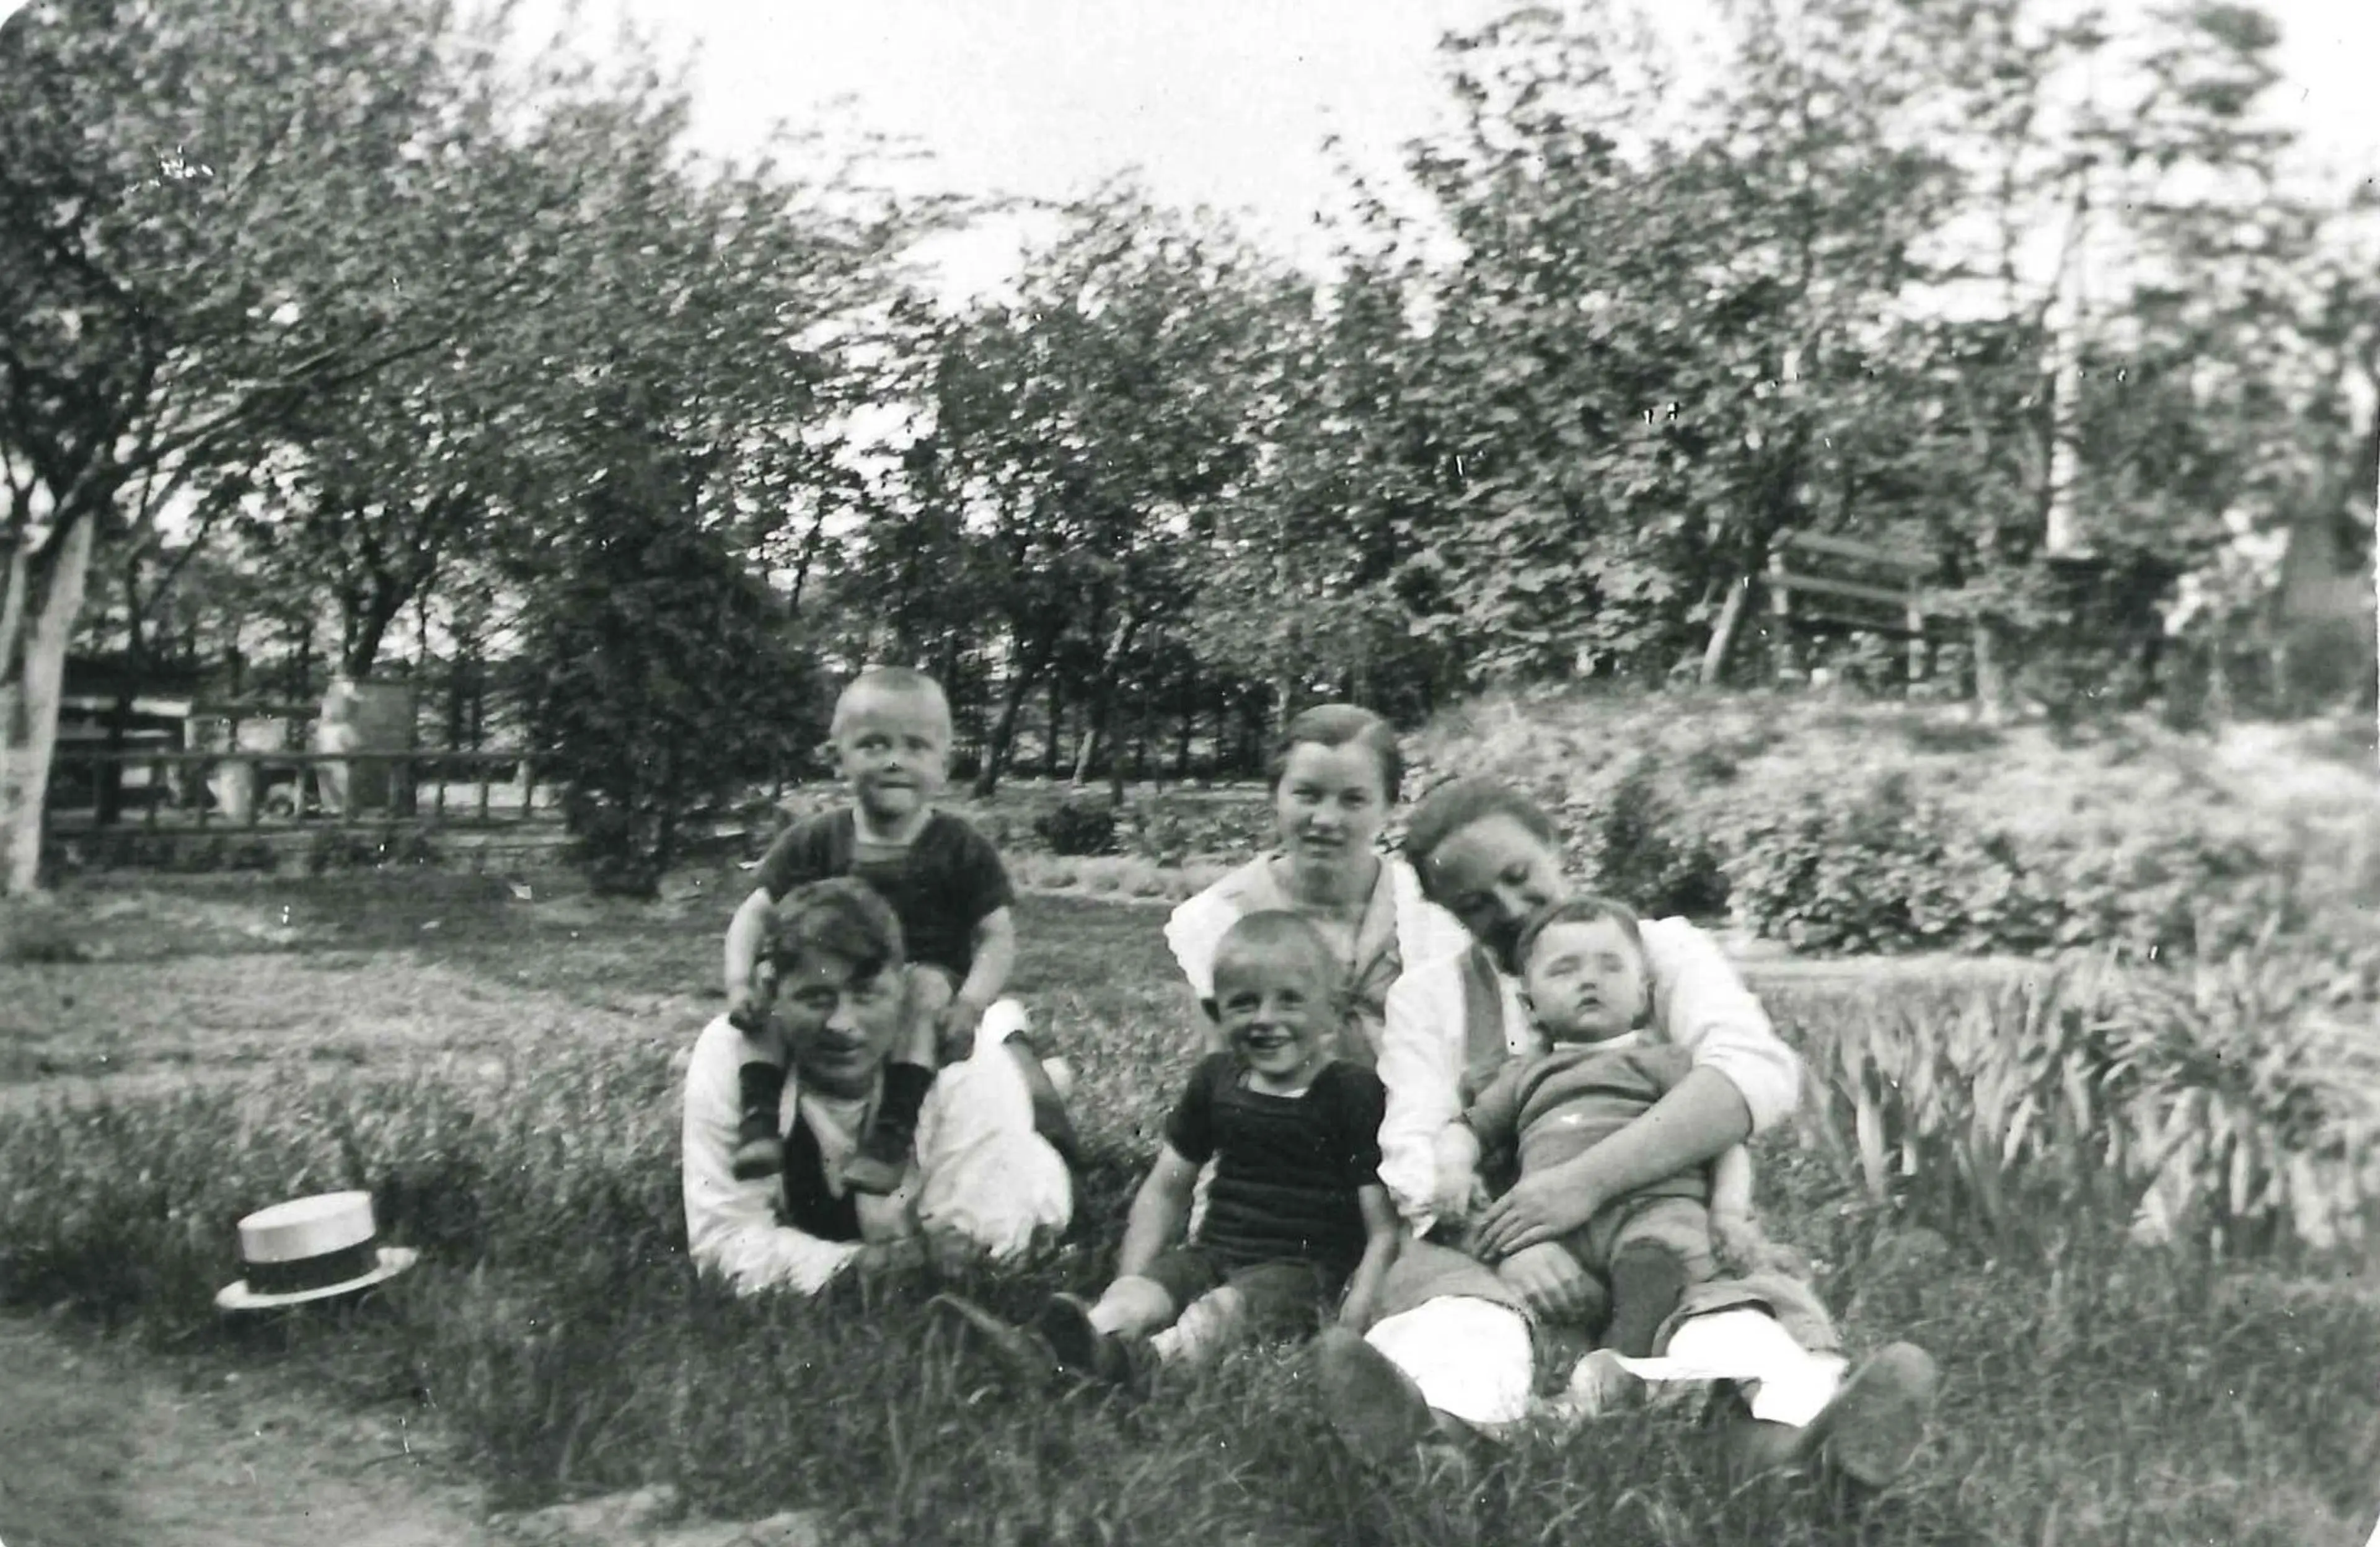 The Kirk Kristiansen family sitting in the grass